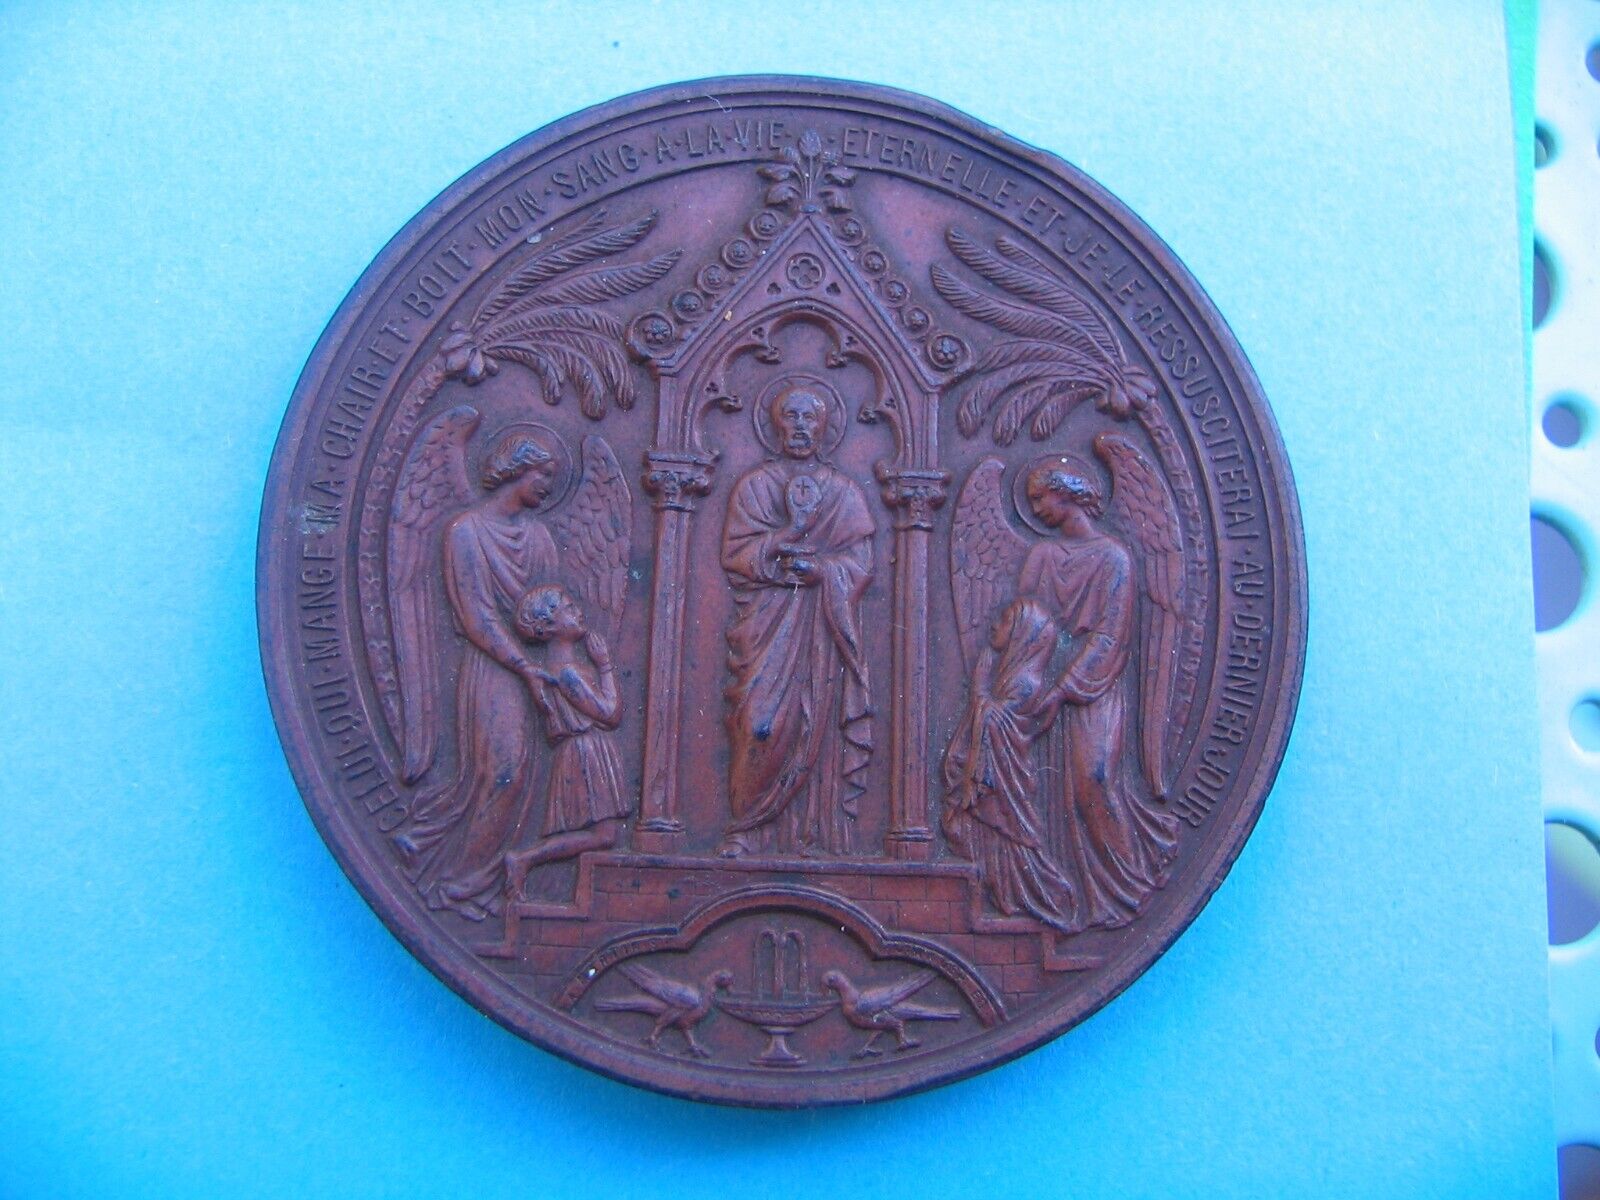 HUGE STUNNING 1800s HIGH RELIEF Baptism,Communion,Confirmation Medal 5 CM, 50mm